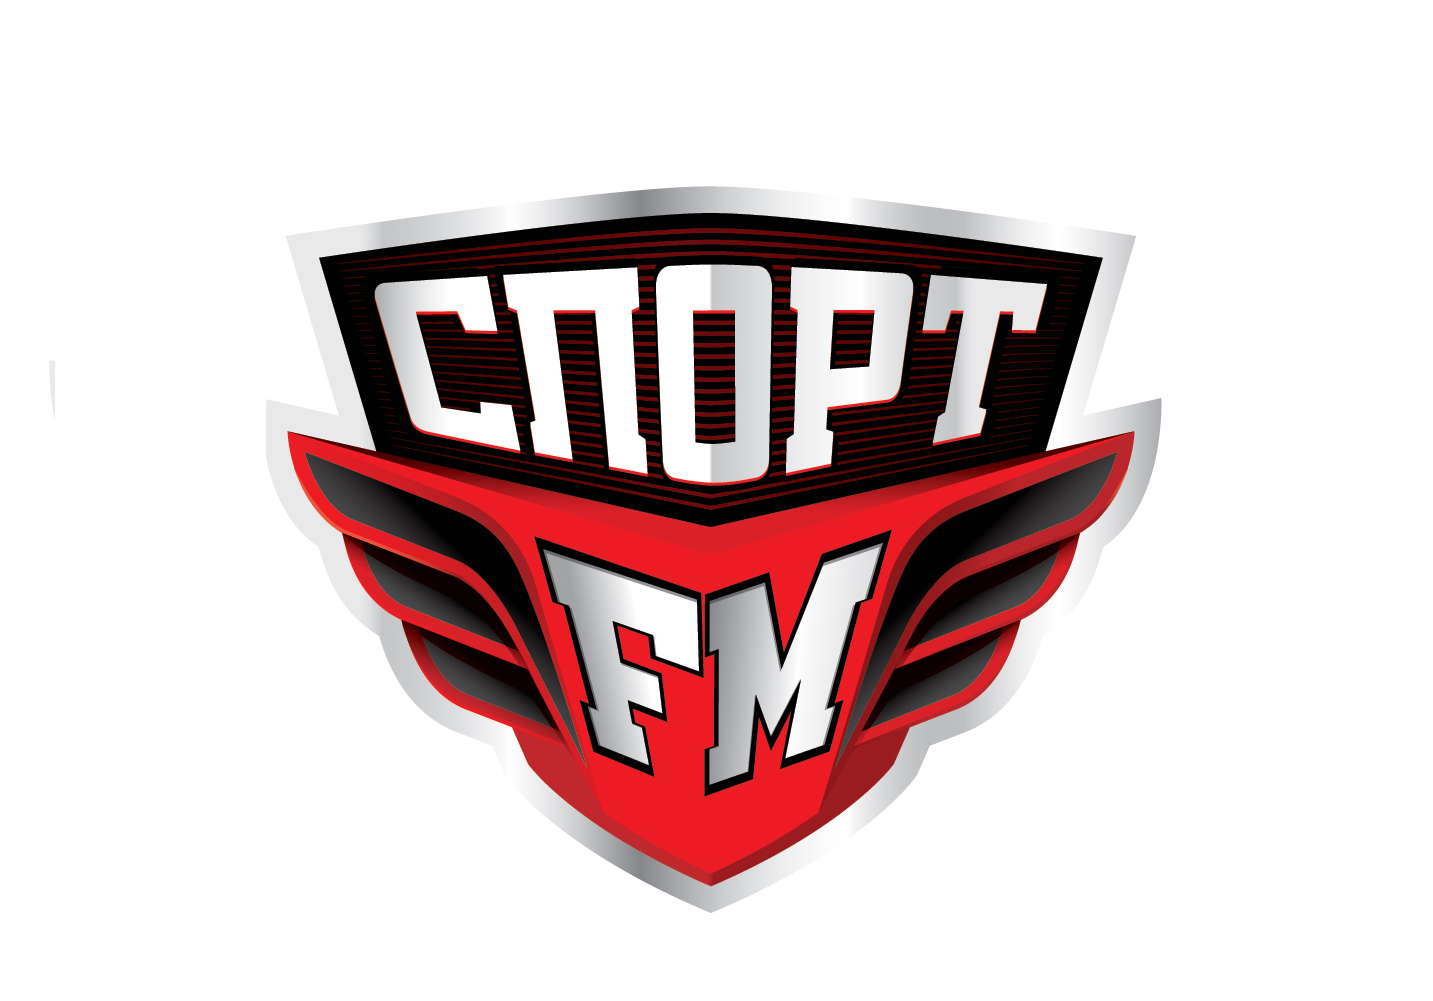 Спорт fm. Первое спортивное радио. Fm логотип. Радио спорт 94.4.